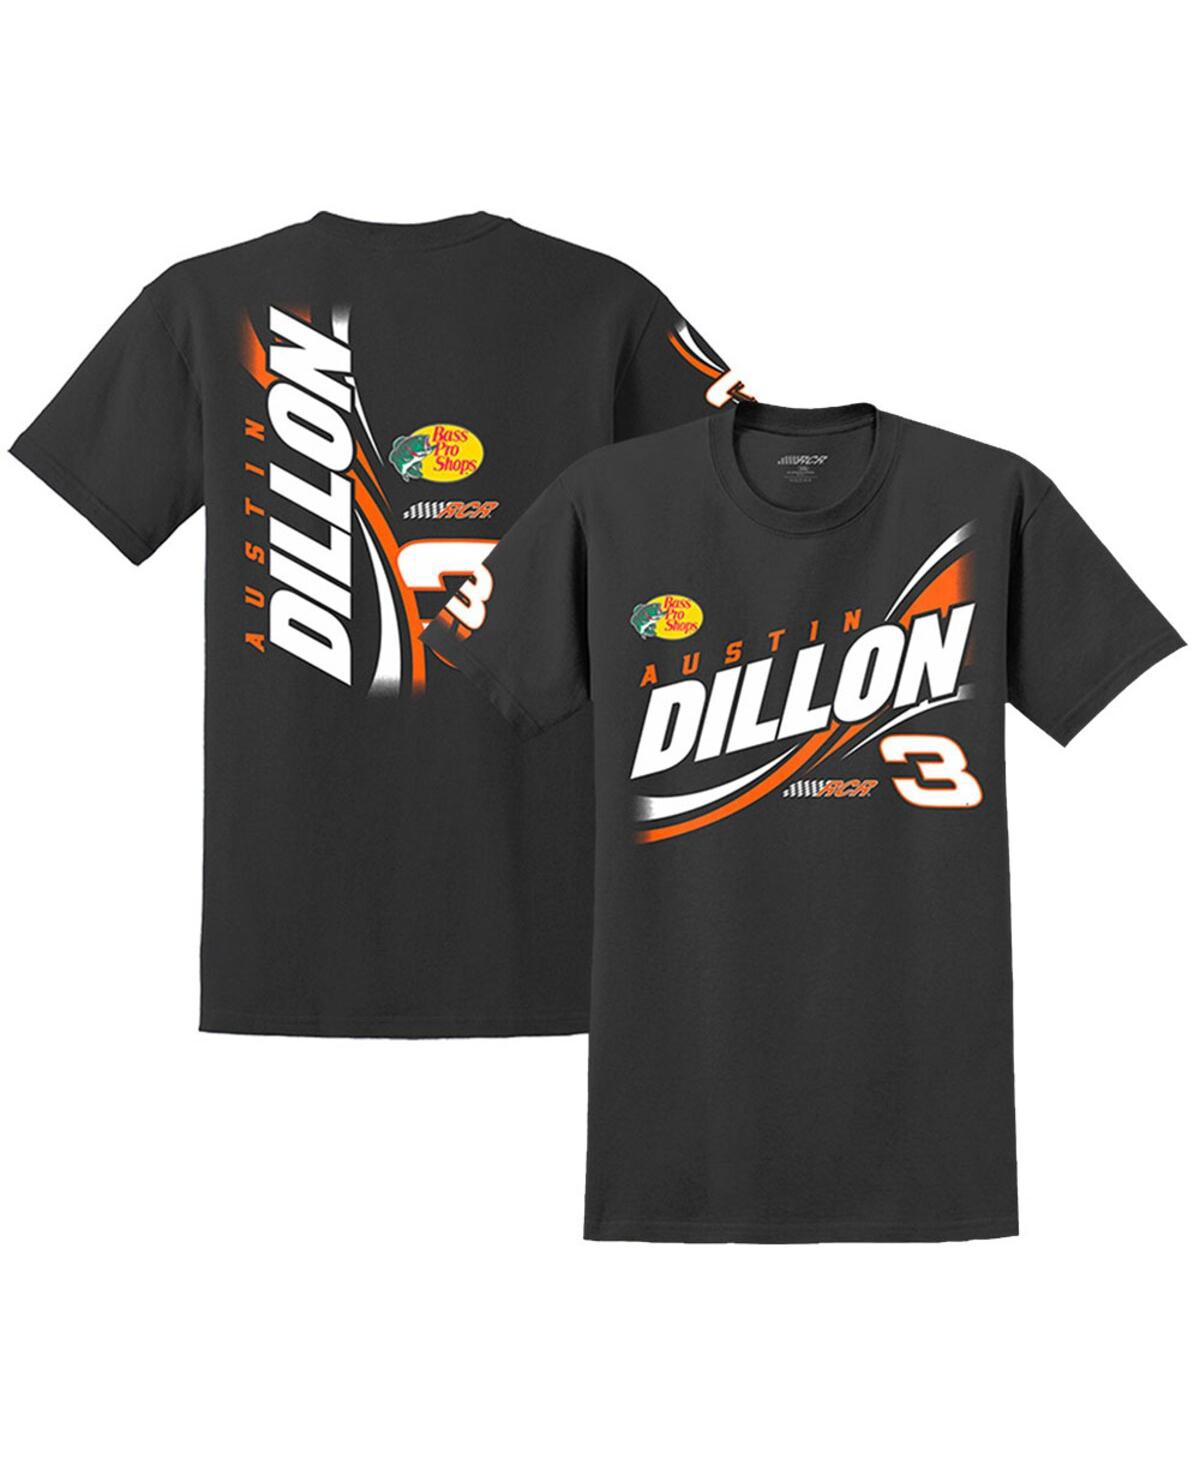 Men's Richard Childress Racing Team Collection Black Austin Dillon Lifestyle T-shirt - Black